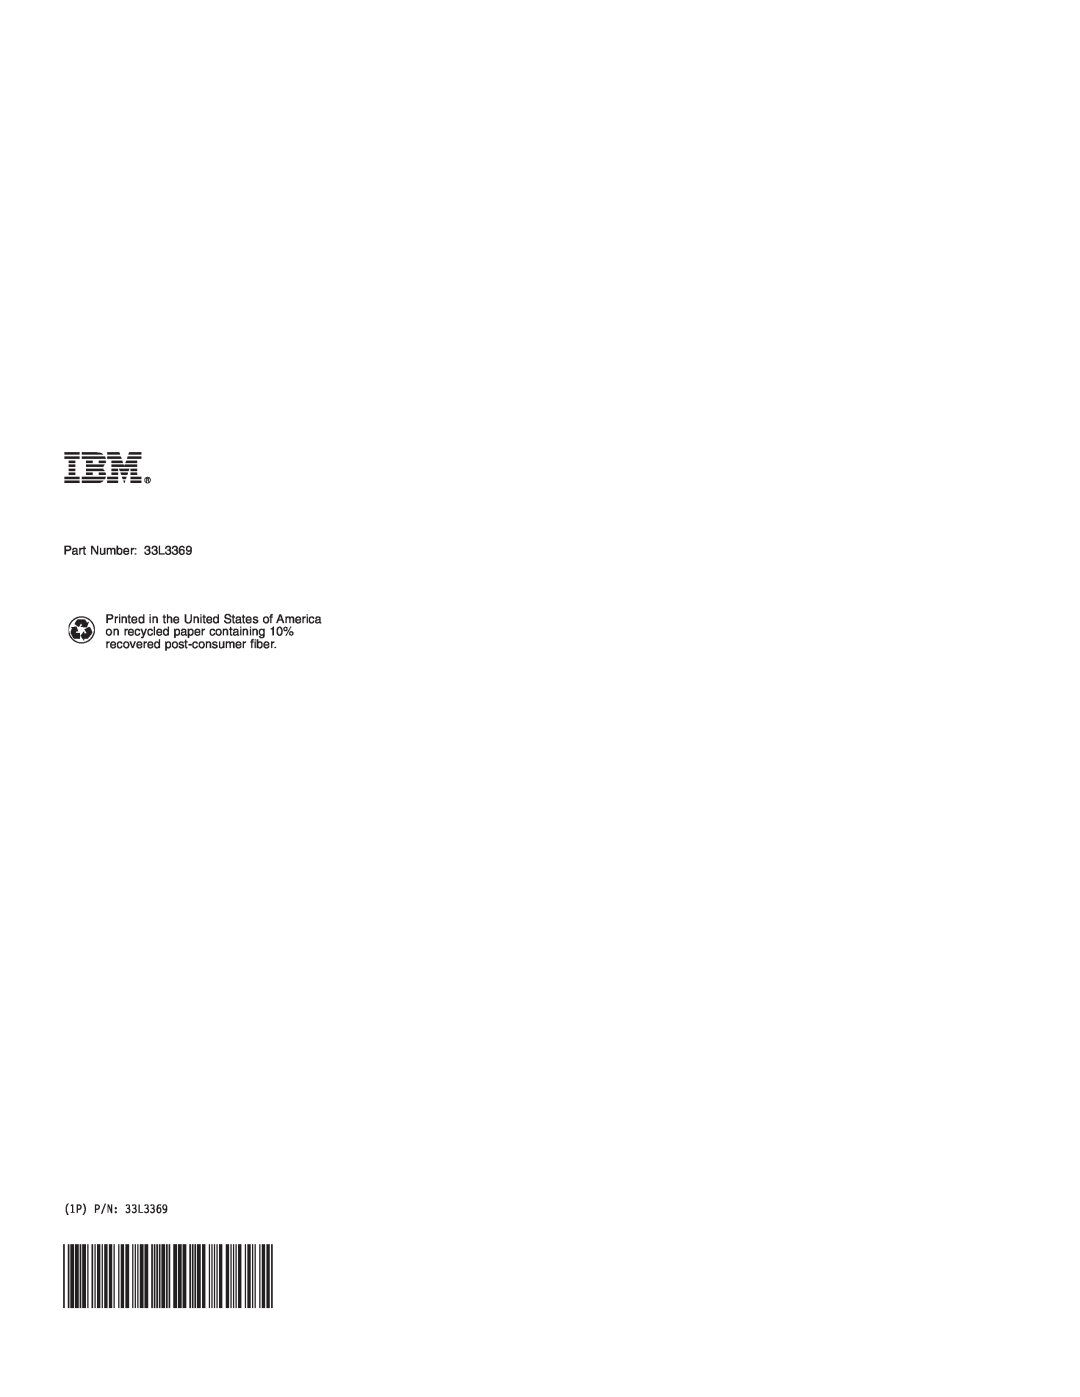 IBM ILV200, ILC200 manual Part Number 33L3369, 1P P/N 33L3369 